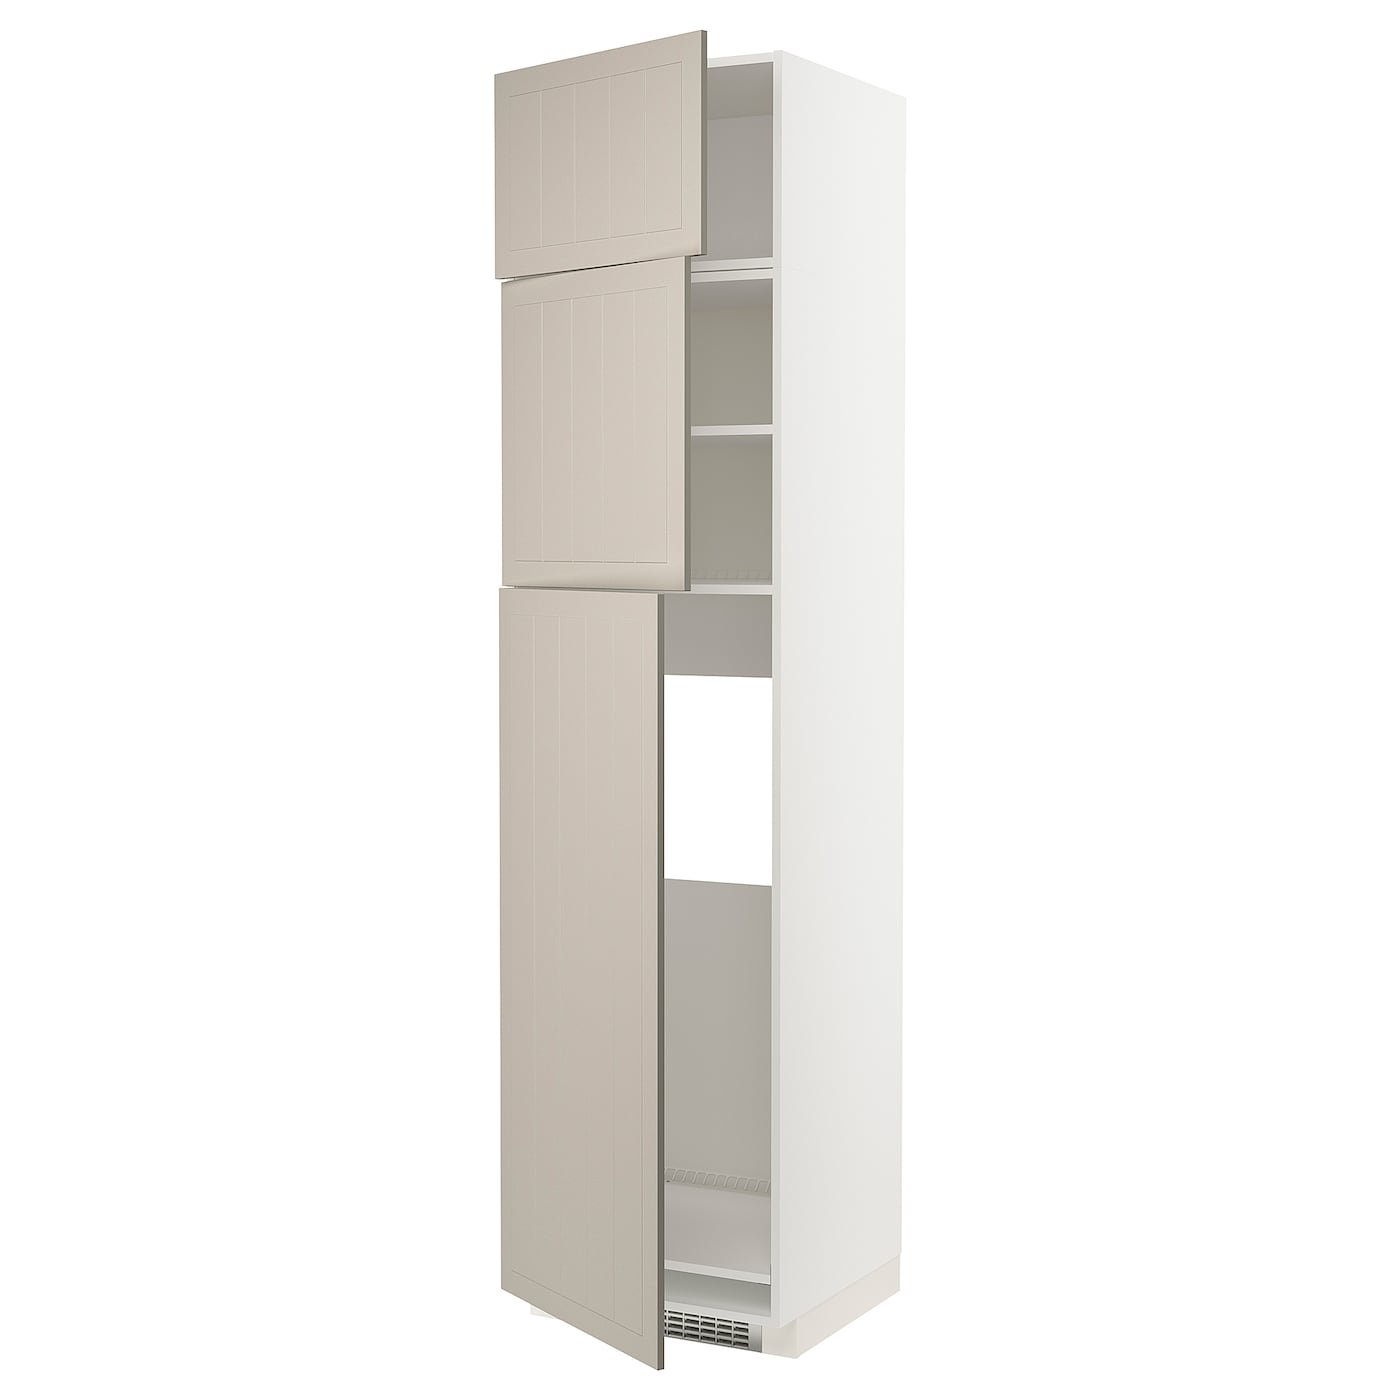 Высокий холодильный шкаф - IKEA METOD/МЕТОД ИКЕА, 60х60х240 см, бежевый/белый